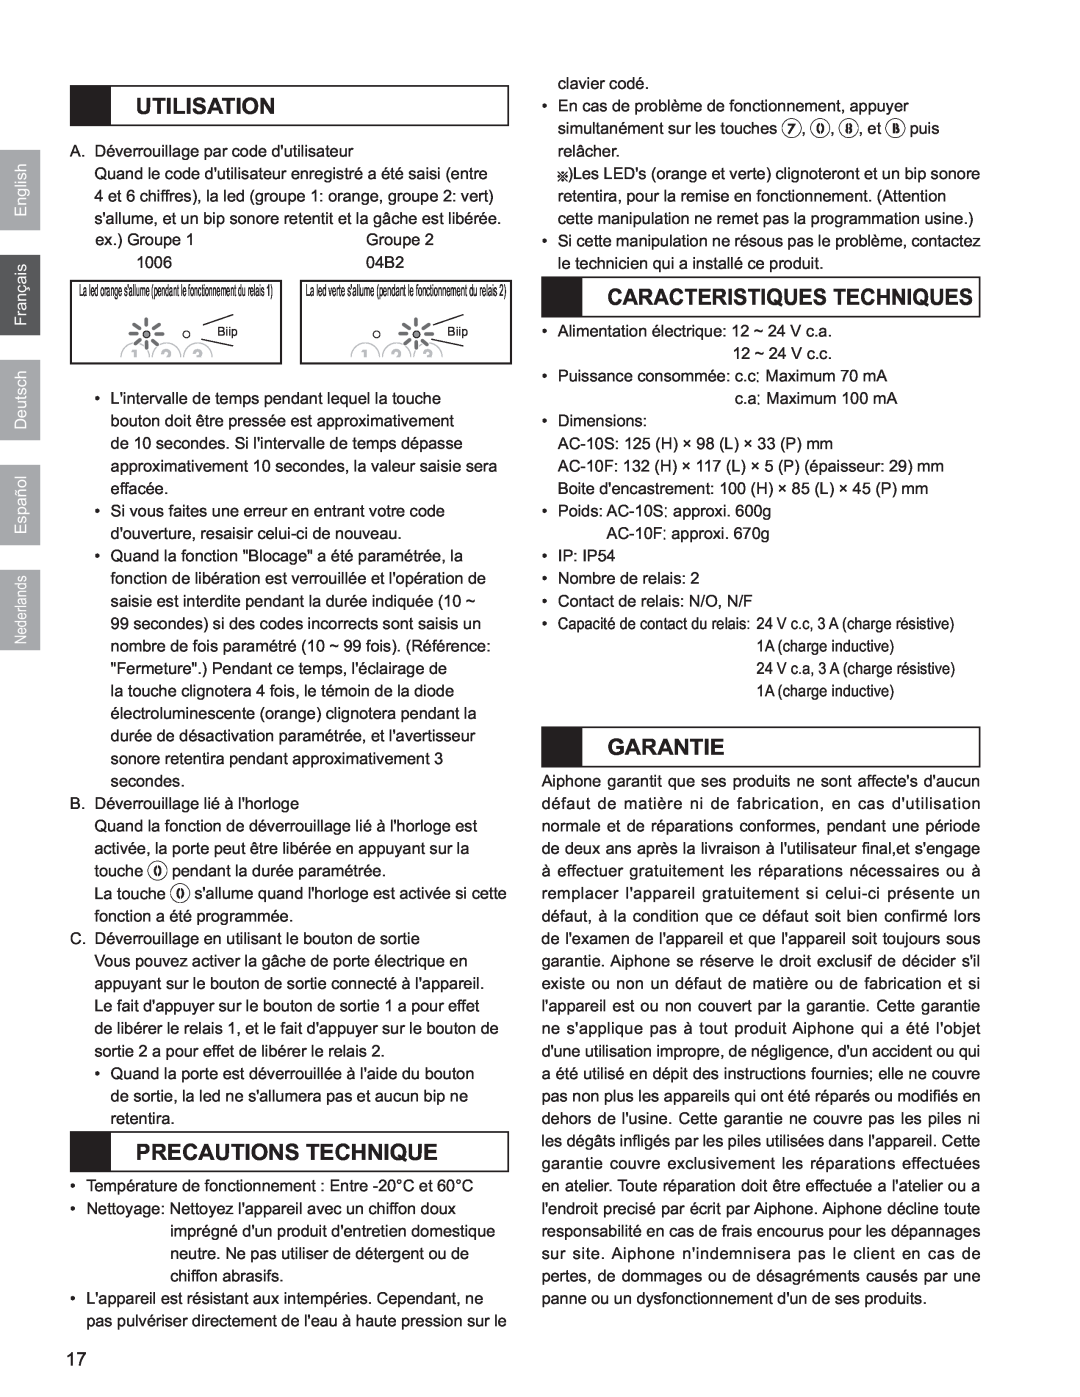 Aiphone AC-10F, AC-10S operation manual Utilisation, Precautions Technique, Caracteristiques Techniques, Garantie 